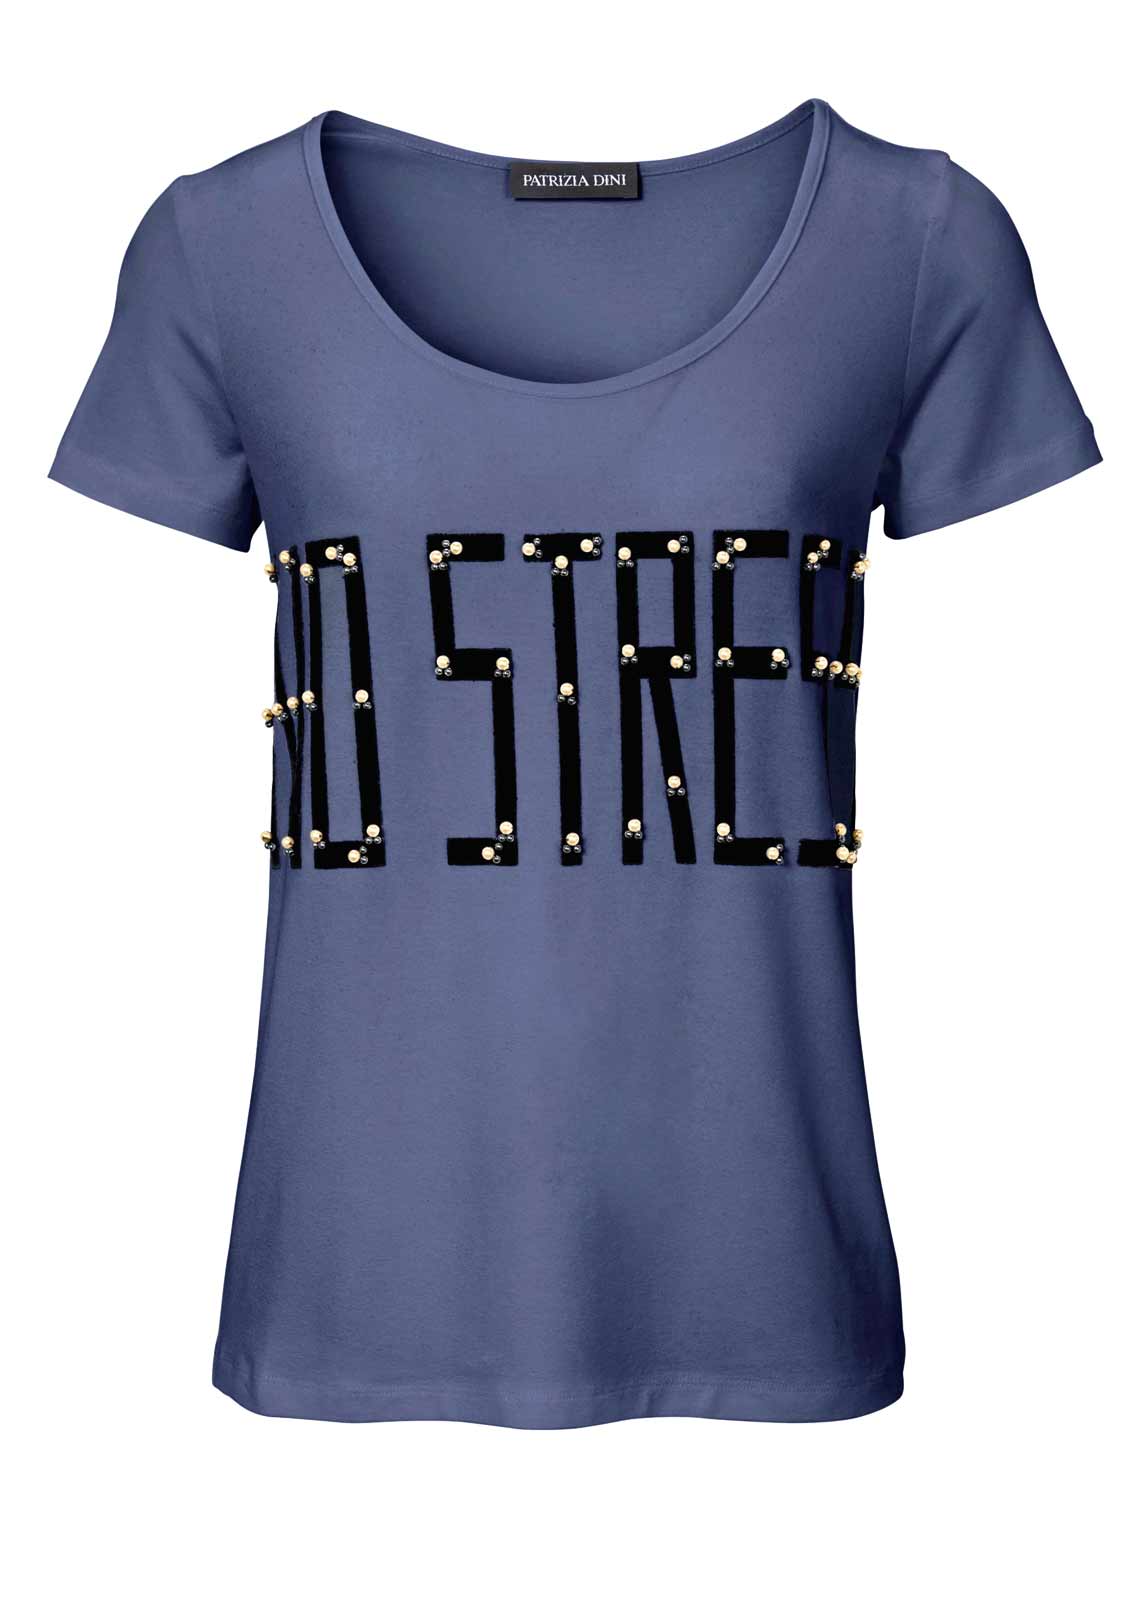 Patrizia Dini Damen Designer-Shirt mit Perlen, jeansblau